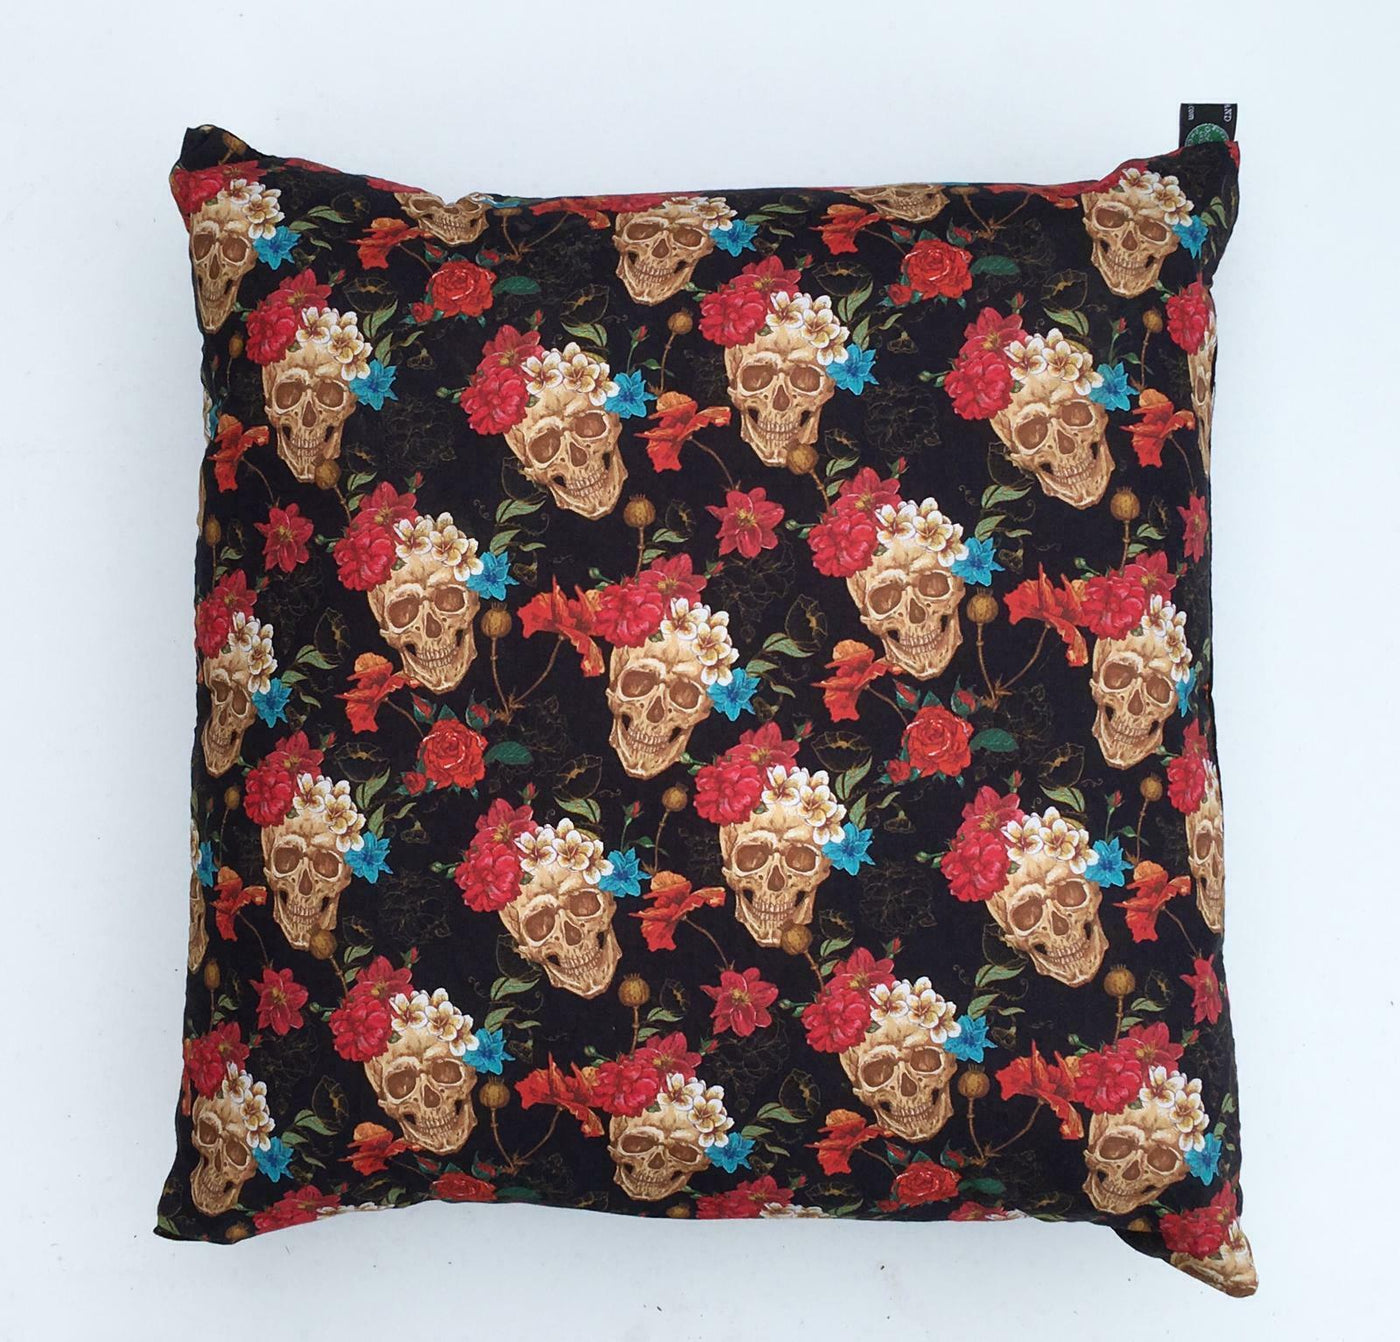 Skull & Flower Gothic Celtic Cushion Cover Sofa Decor Case fits 18" x 18"